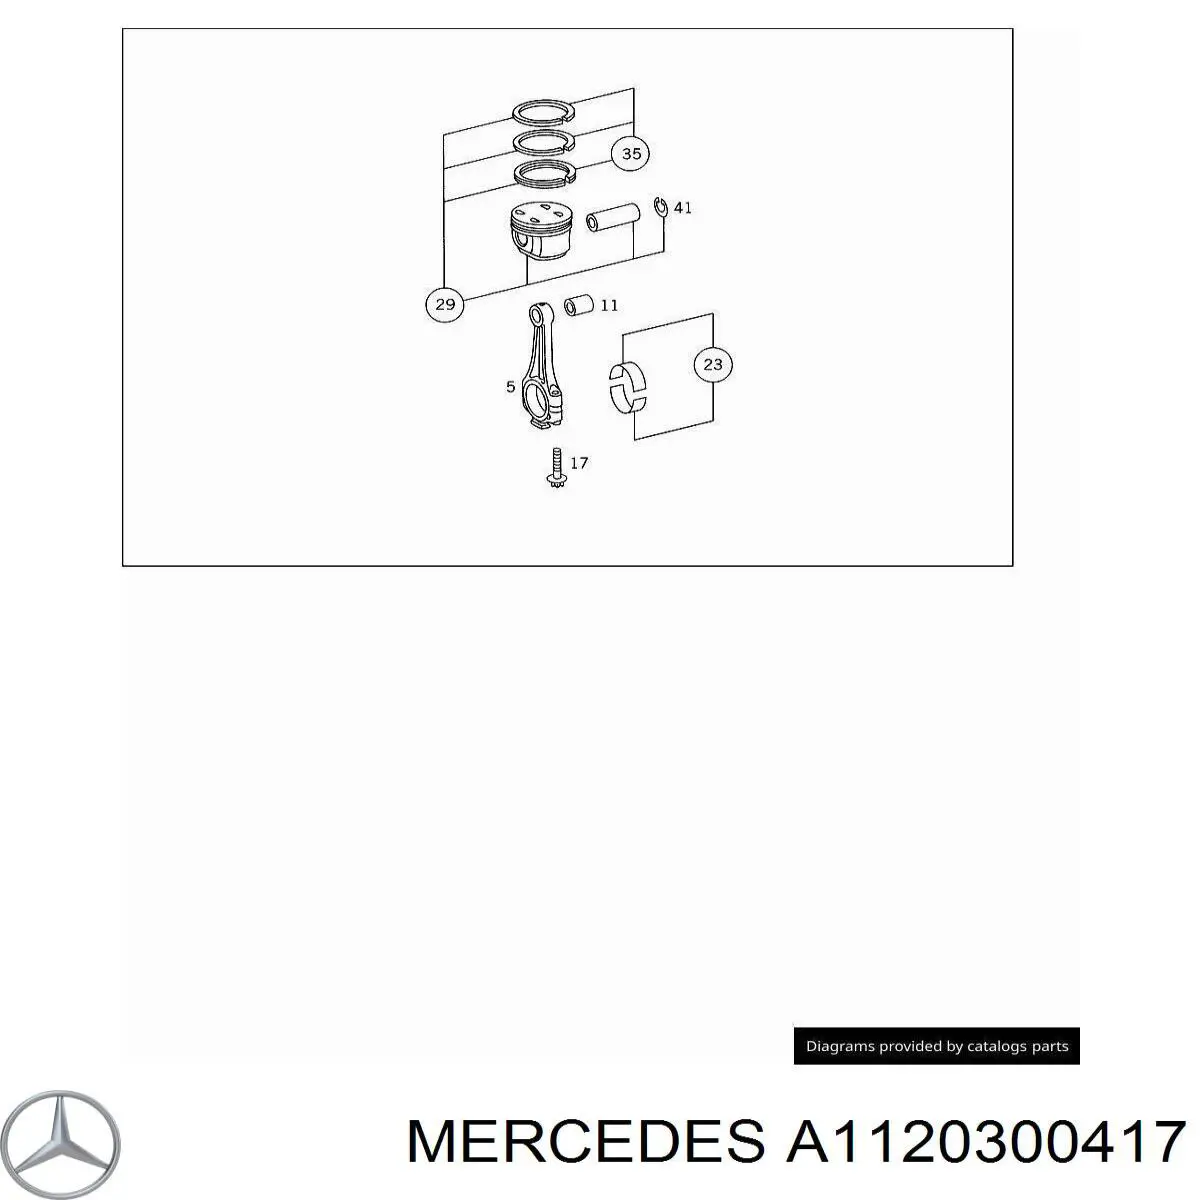 A1120300417 Mercedes поршень в комплекте на 1 цилиндр, std